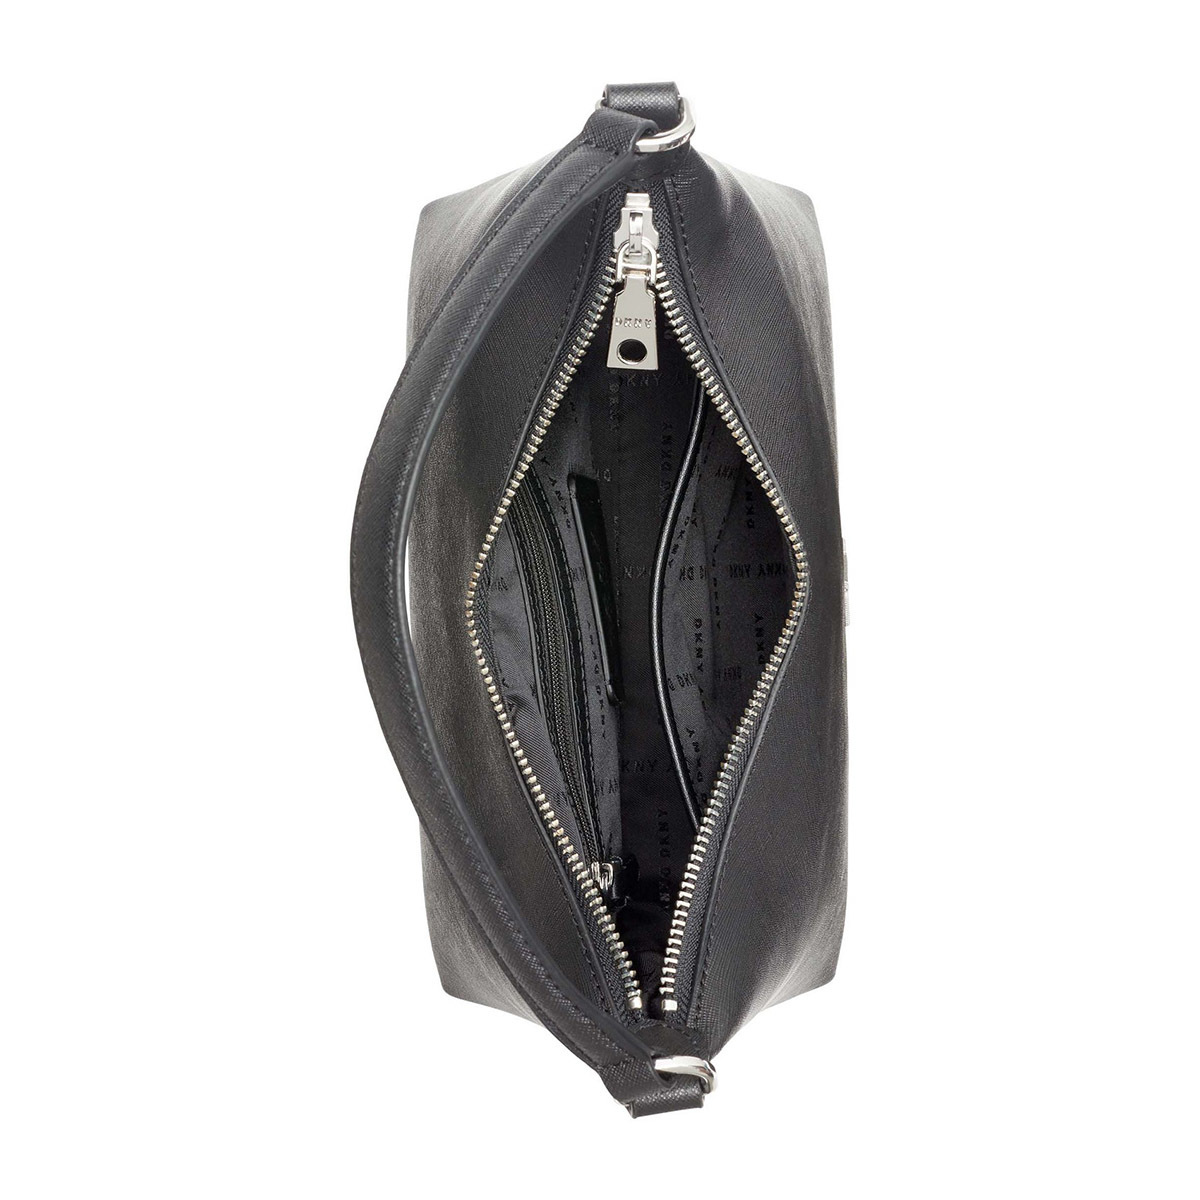 сумка DKNY Carol Medium Pouchette цвет black silver / черный с серебром